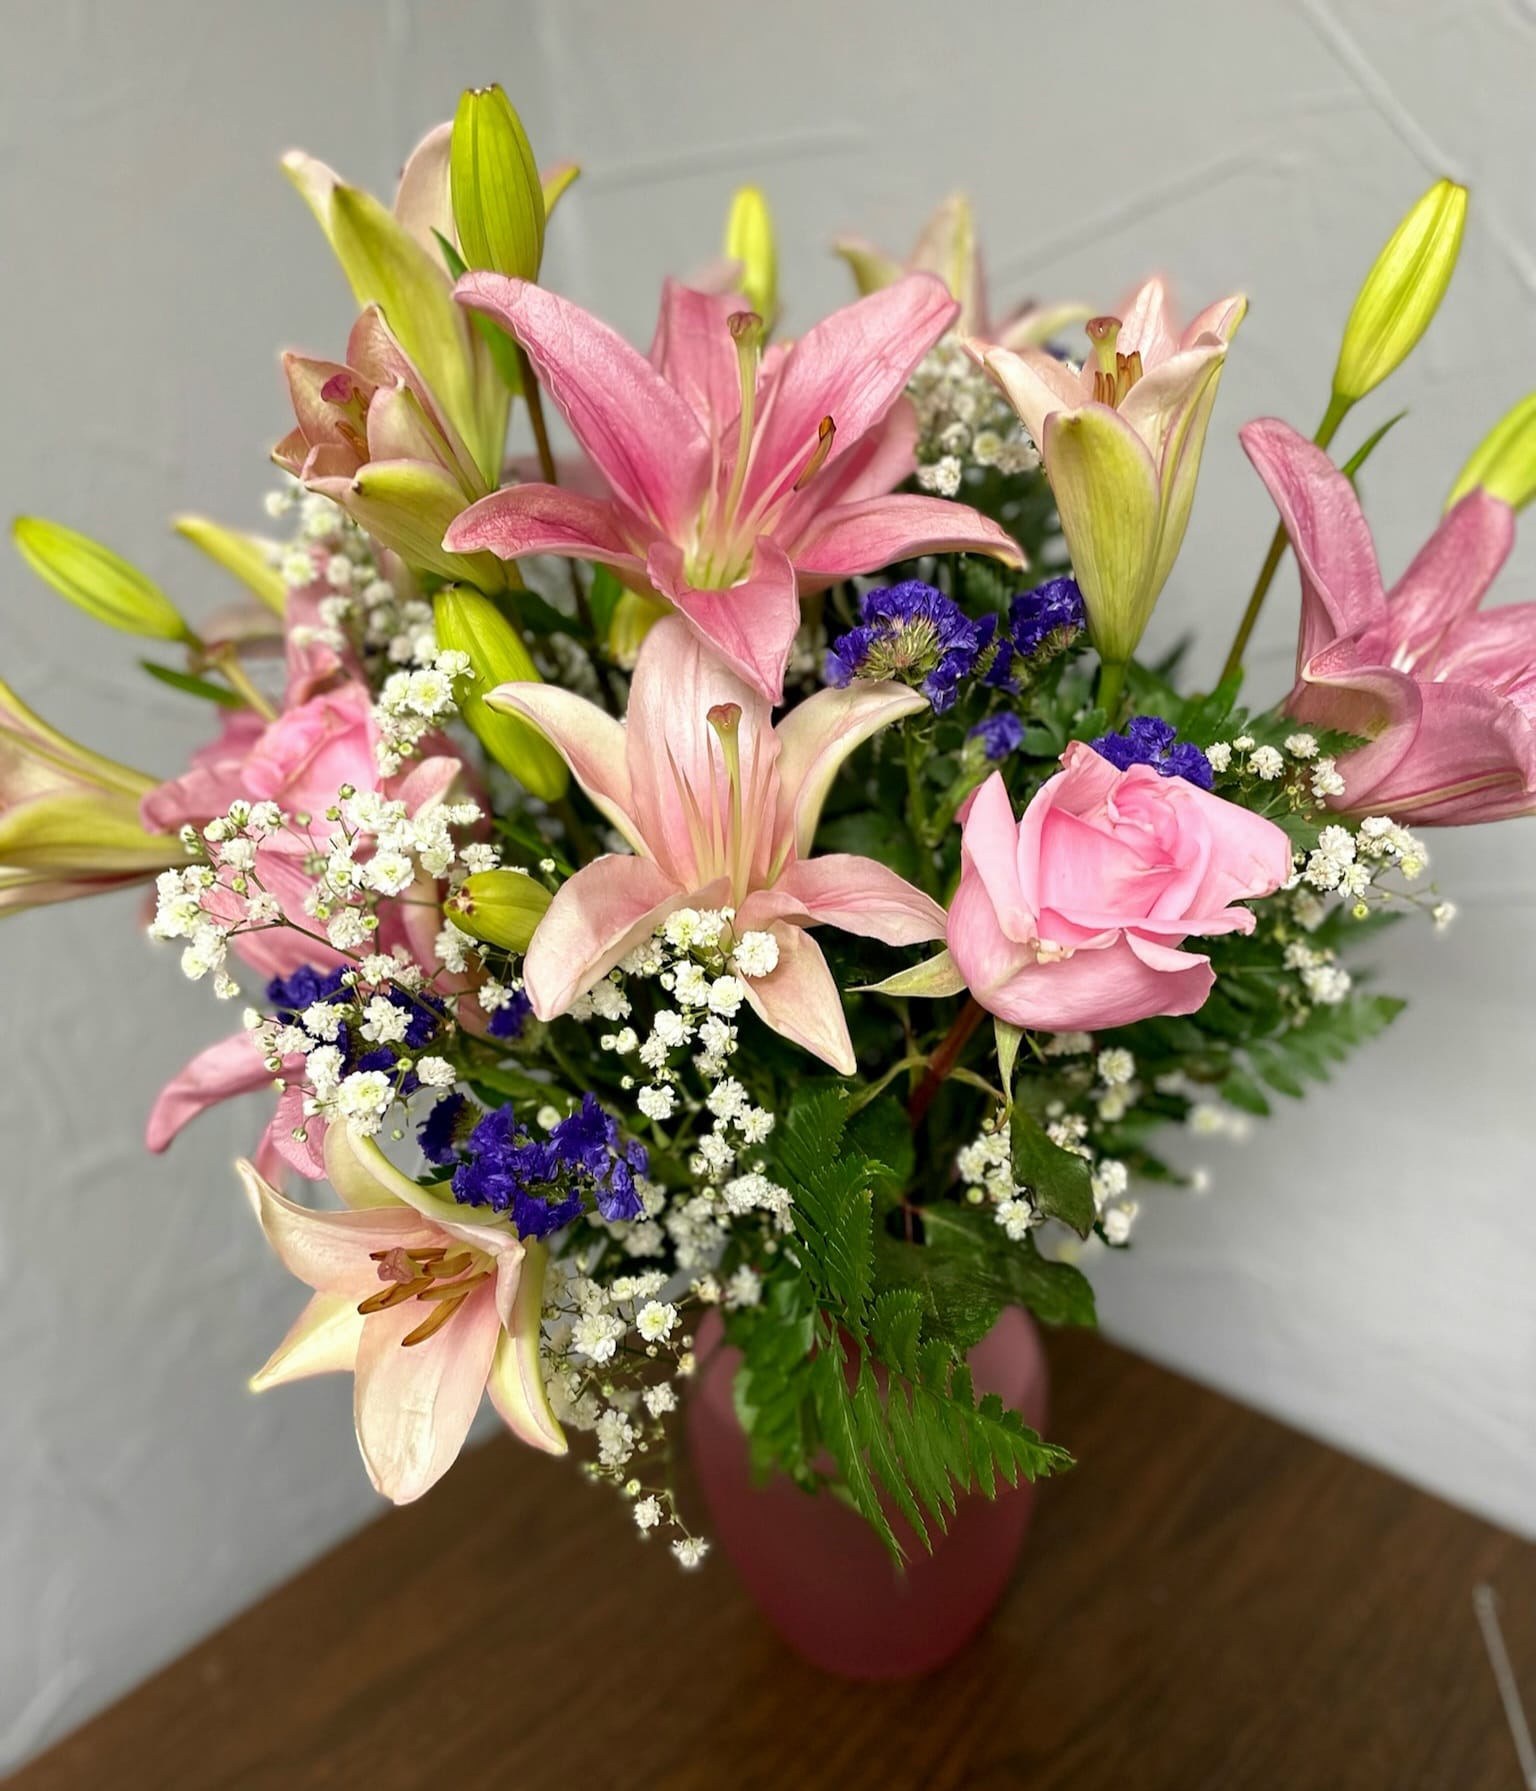 Alora Donna Gifts & Flowers 3273 S Main St, Sandy Lake Pennsylvania 16145